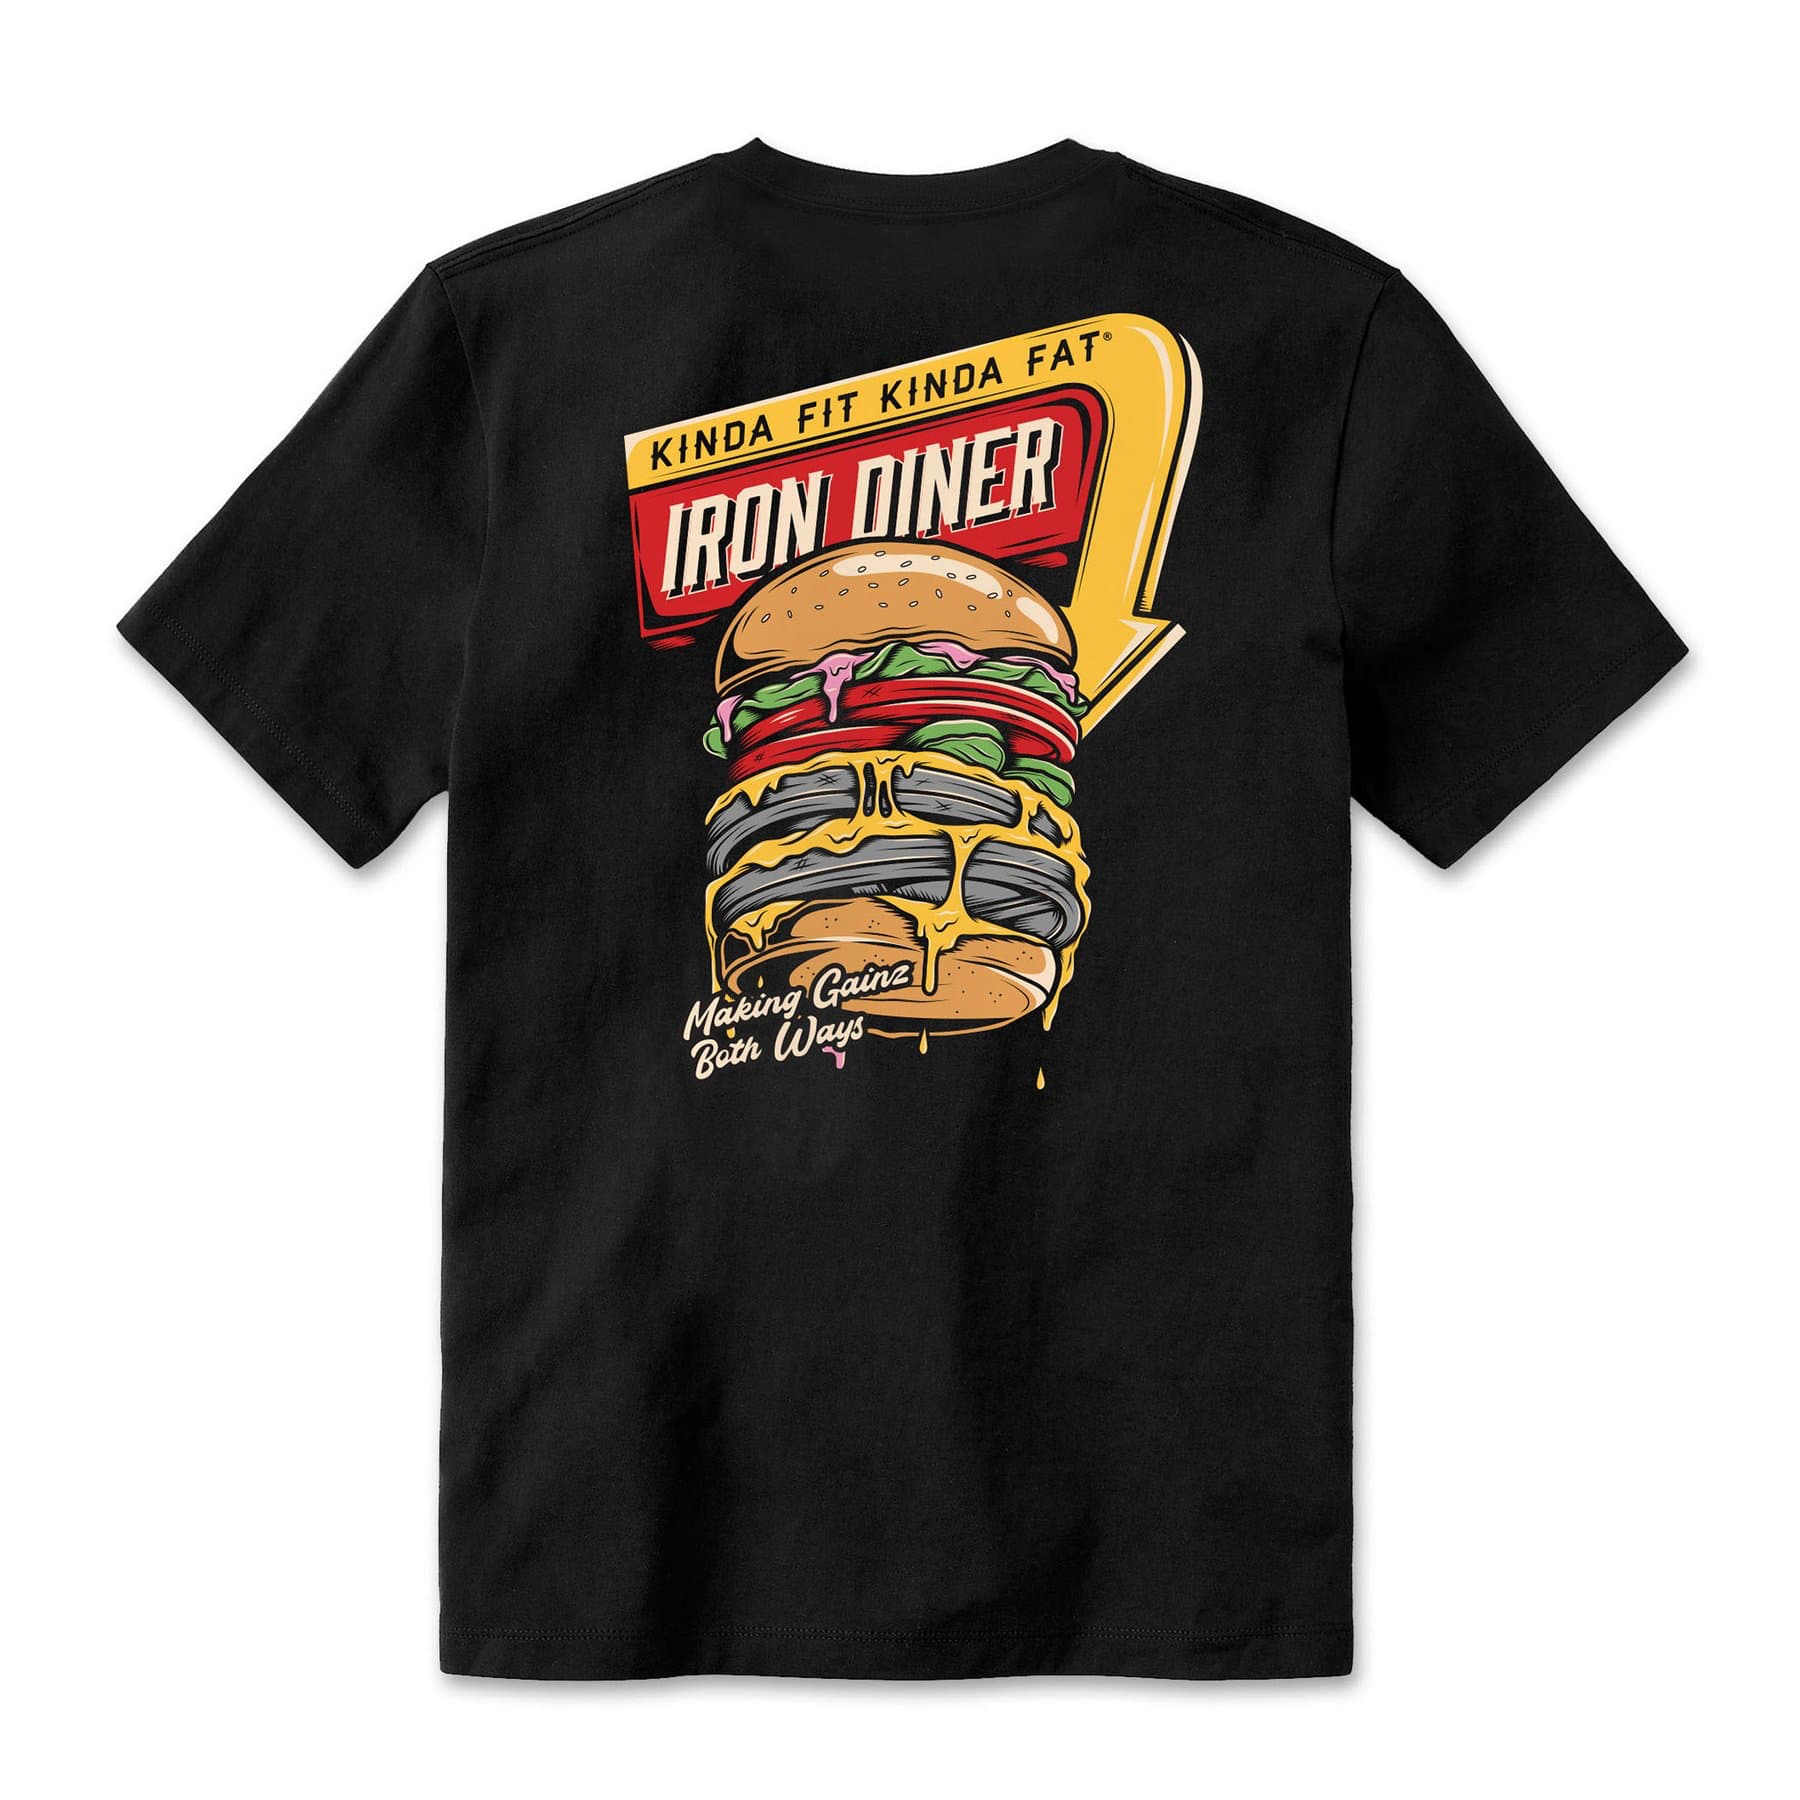 Kinda Fit Kinda Fat "Iron Diner" Burger Tee - 9 for 9